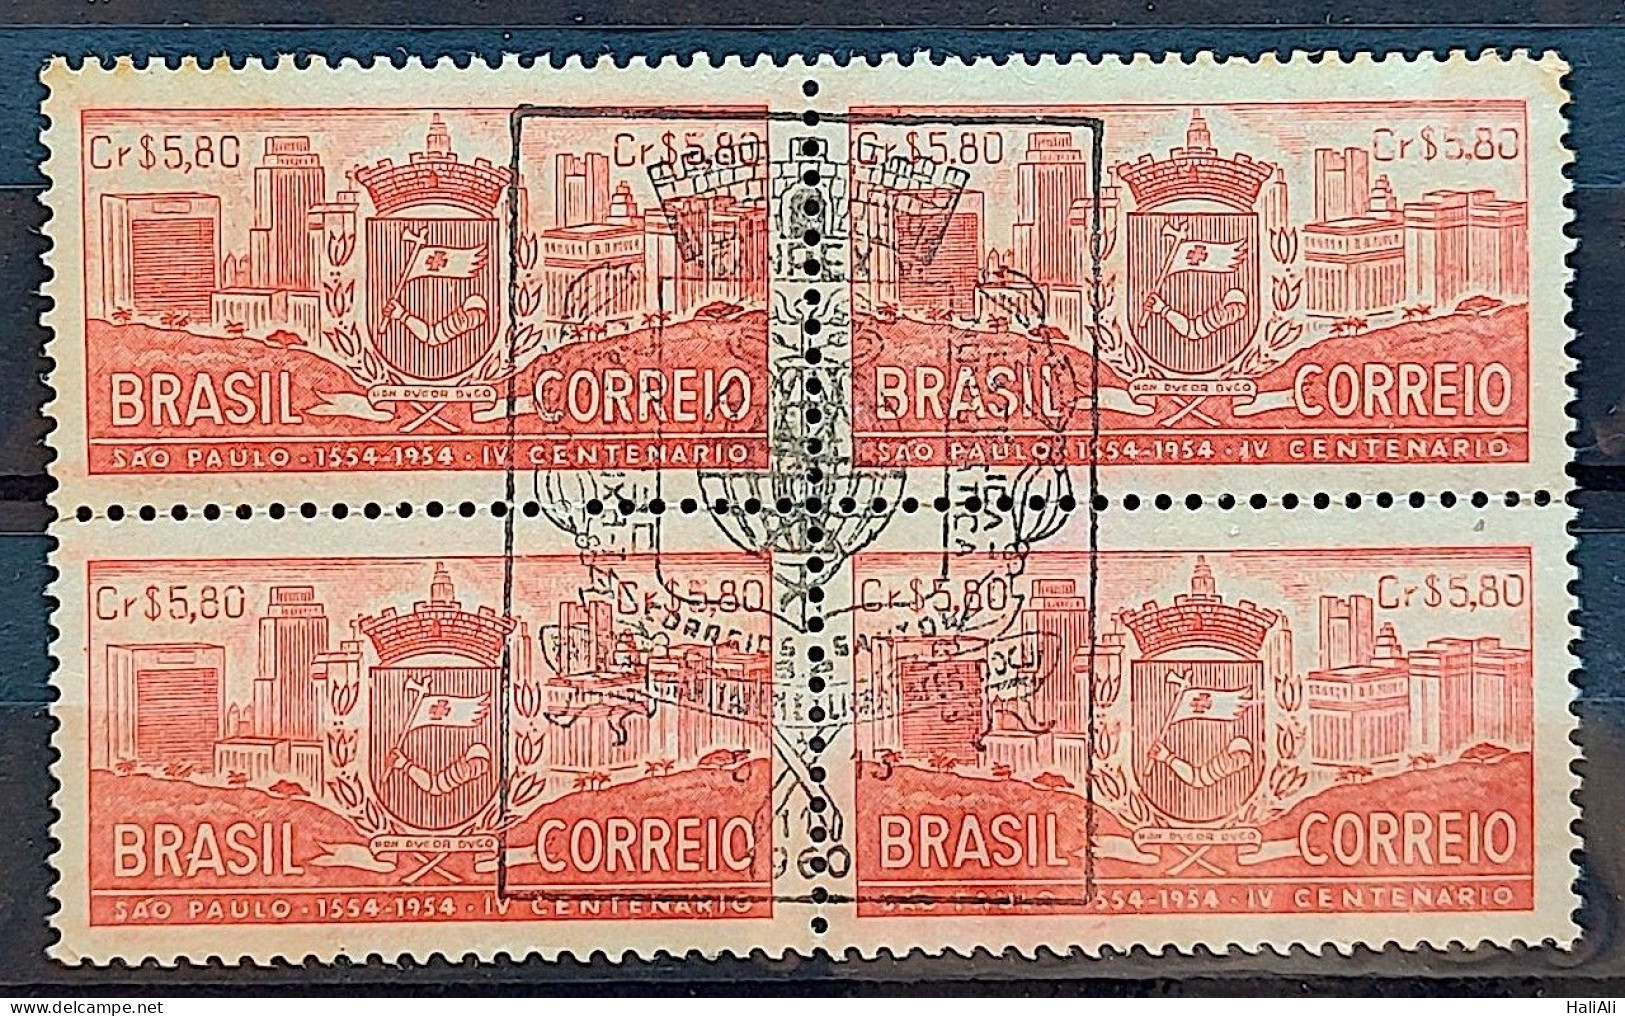 C 332 Brazil Stamp 4 Centenary Of Sao Paulo 1954 Block Of 4 CBC SP - Nuovi